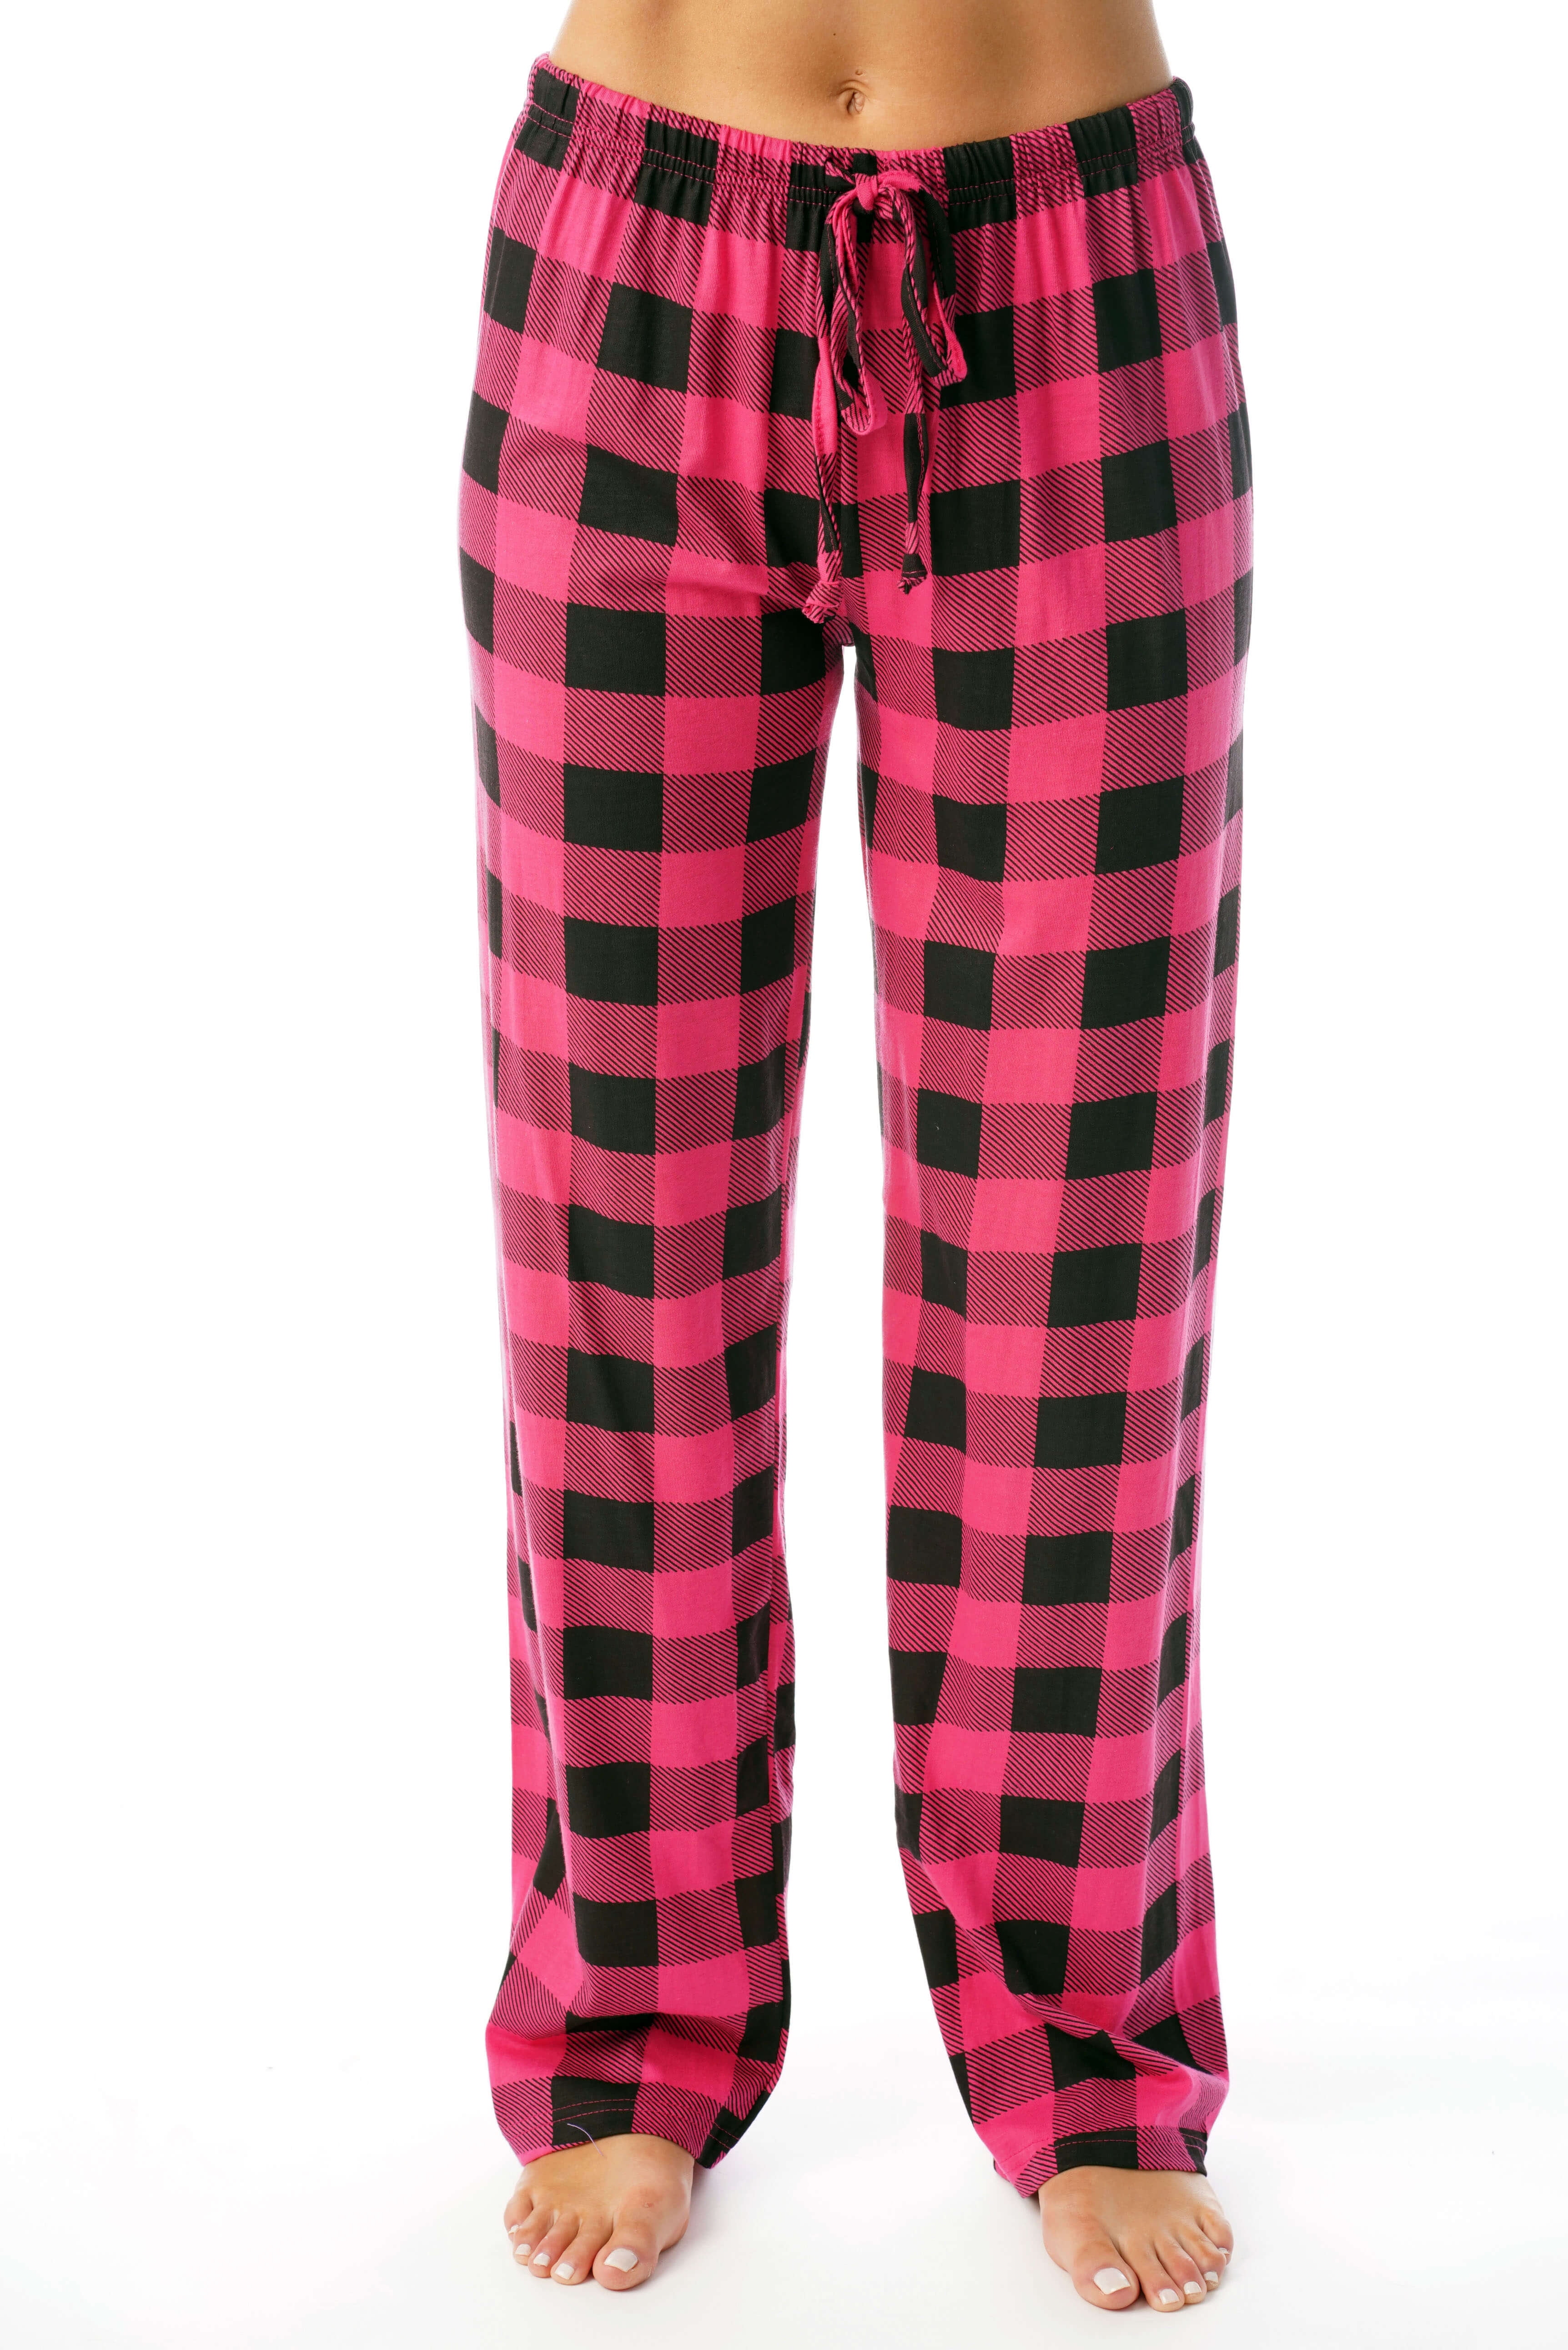 Just Love Pajama Jogger Pant Set Sleepwear Pjs - Buffalo Plaid and Tie Dye,  Buffalo Plaid - Red Black, Small : : Clothing, Shoes & Accessories